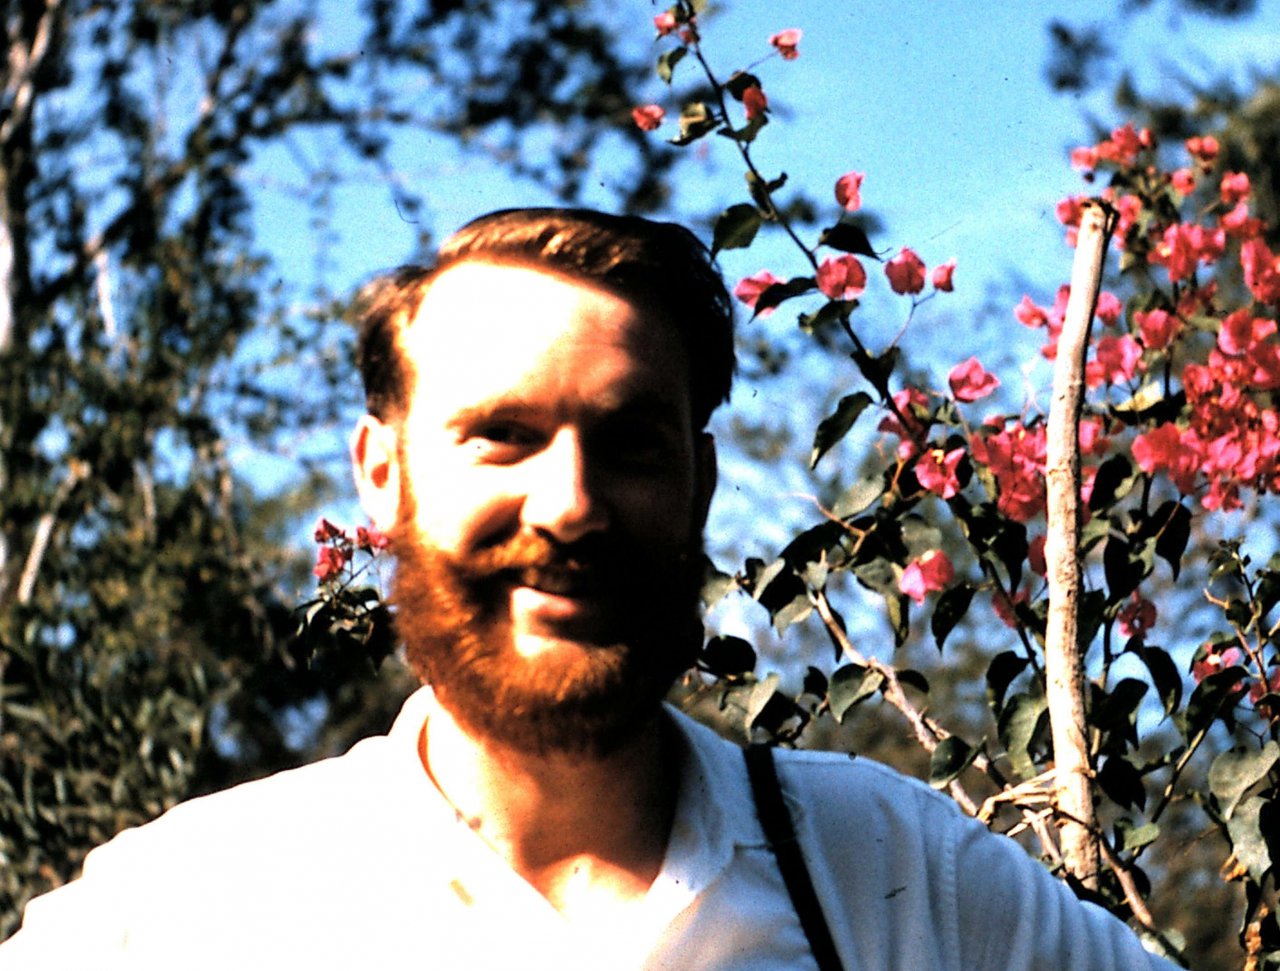 Burnett Pender with Beard, ca. 1958, Aden